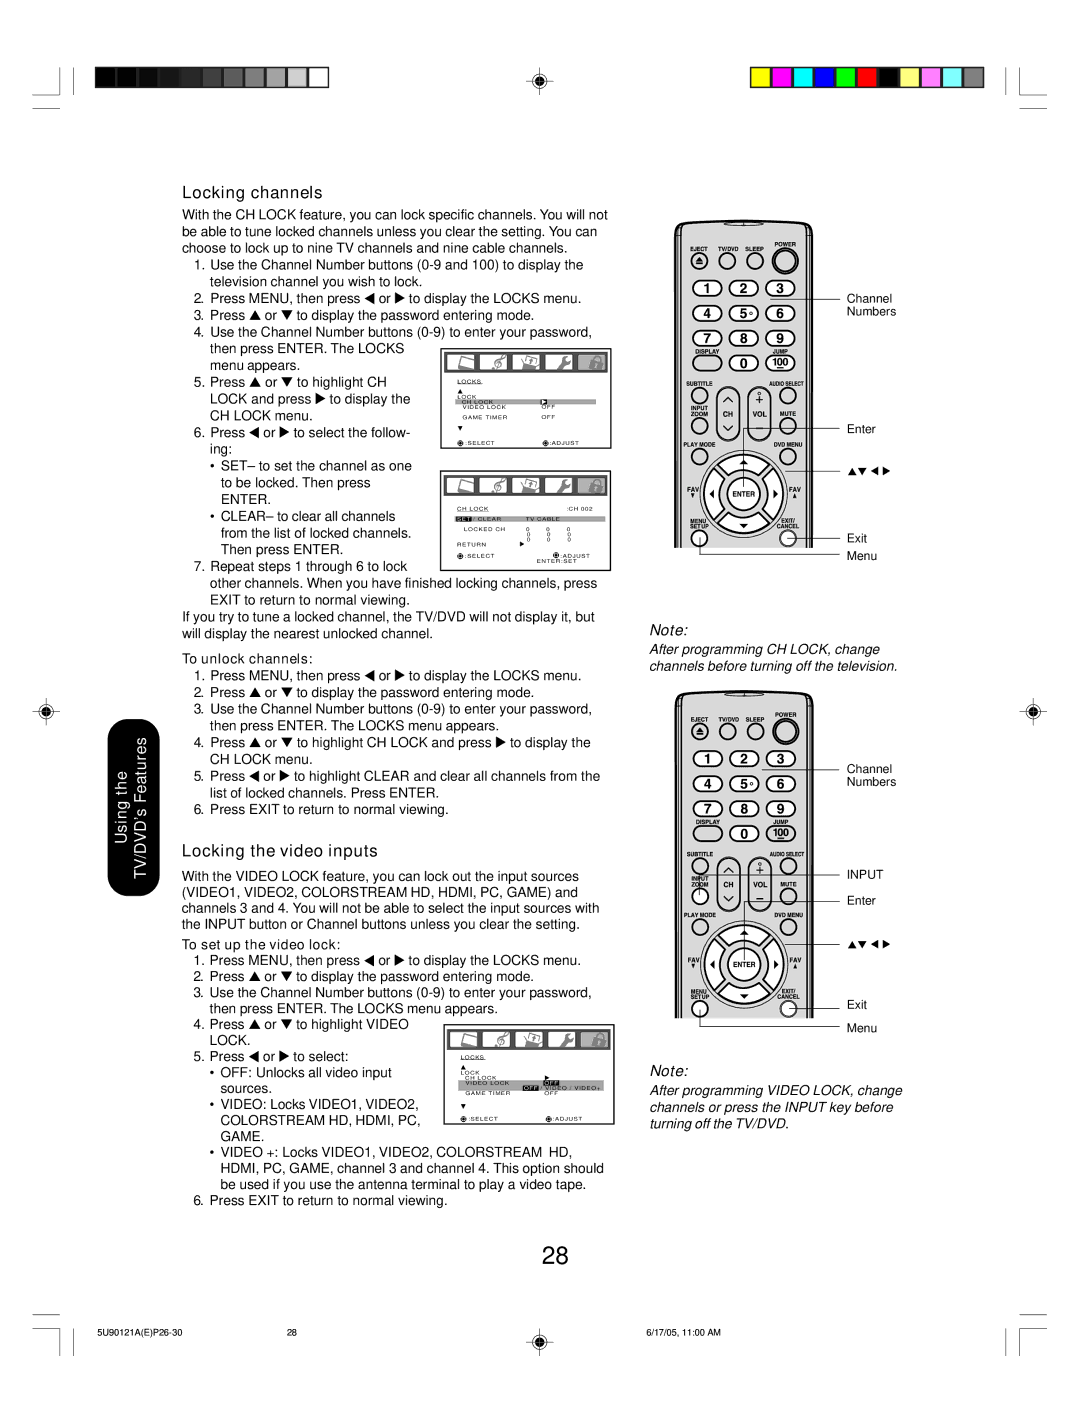 Toshiba 17HLV85 appendix Locking channels, Locking the video inputs 